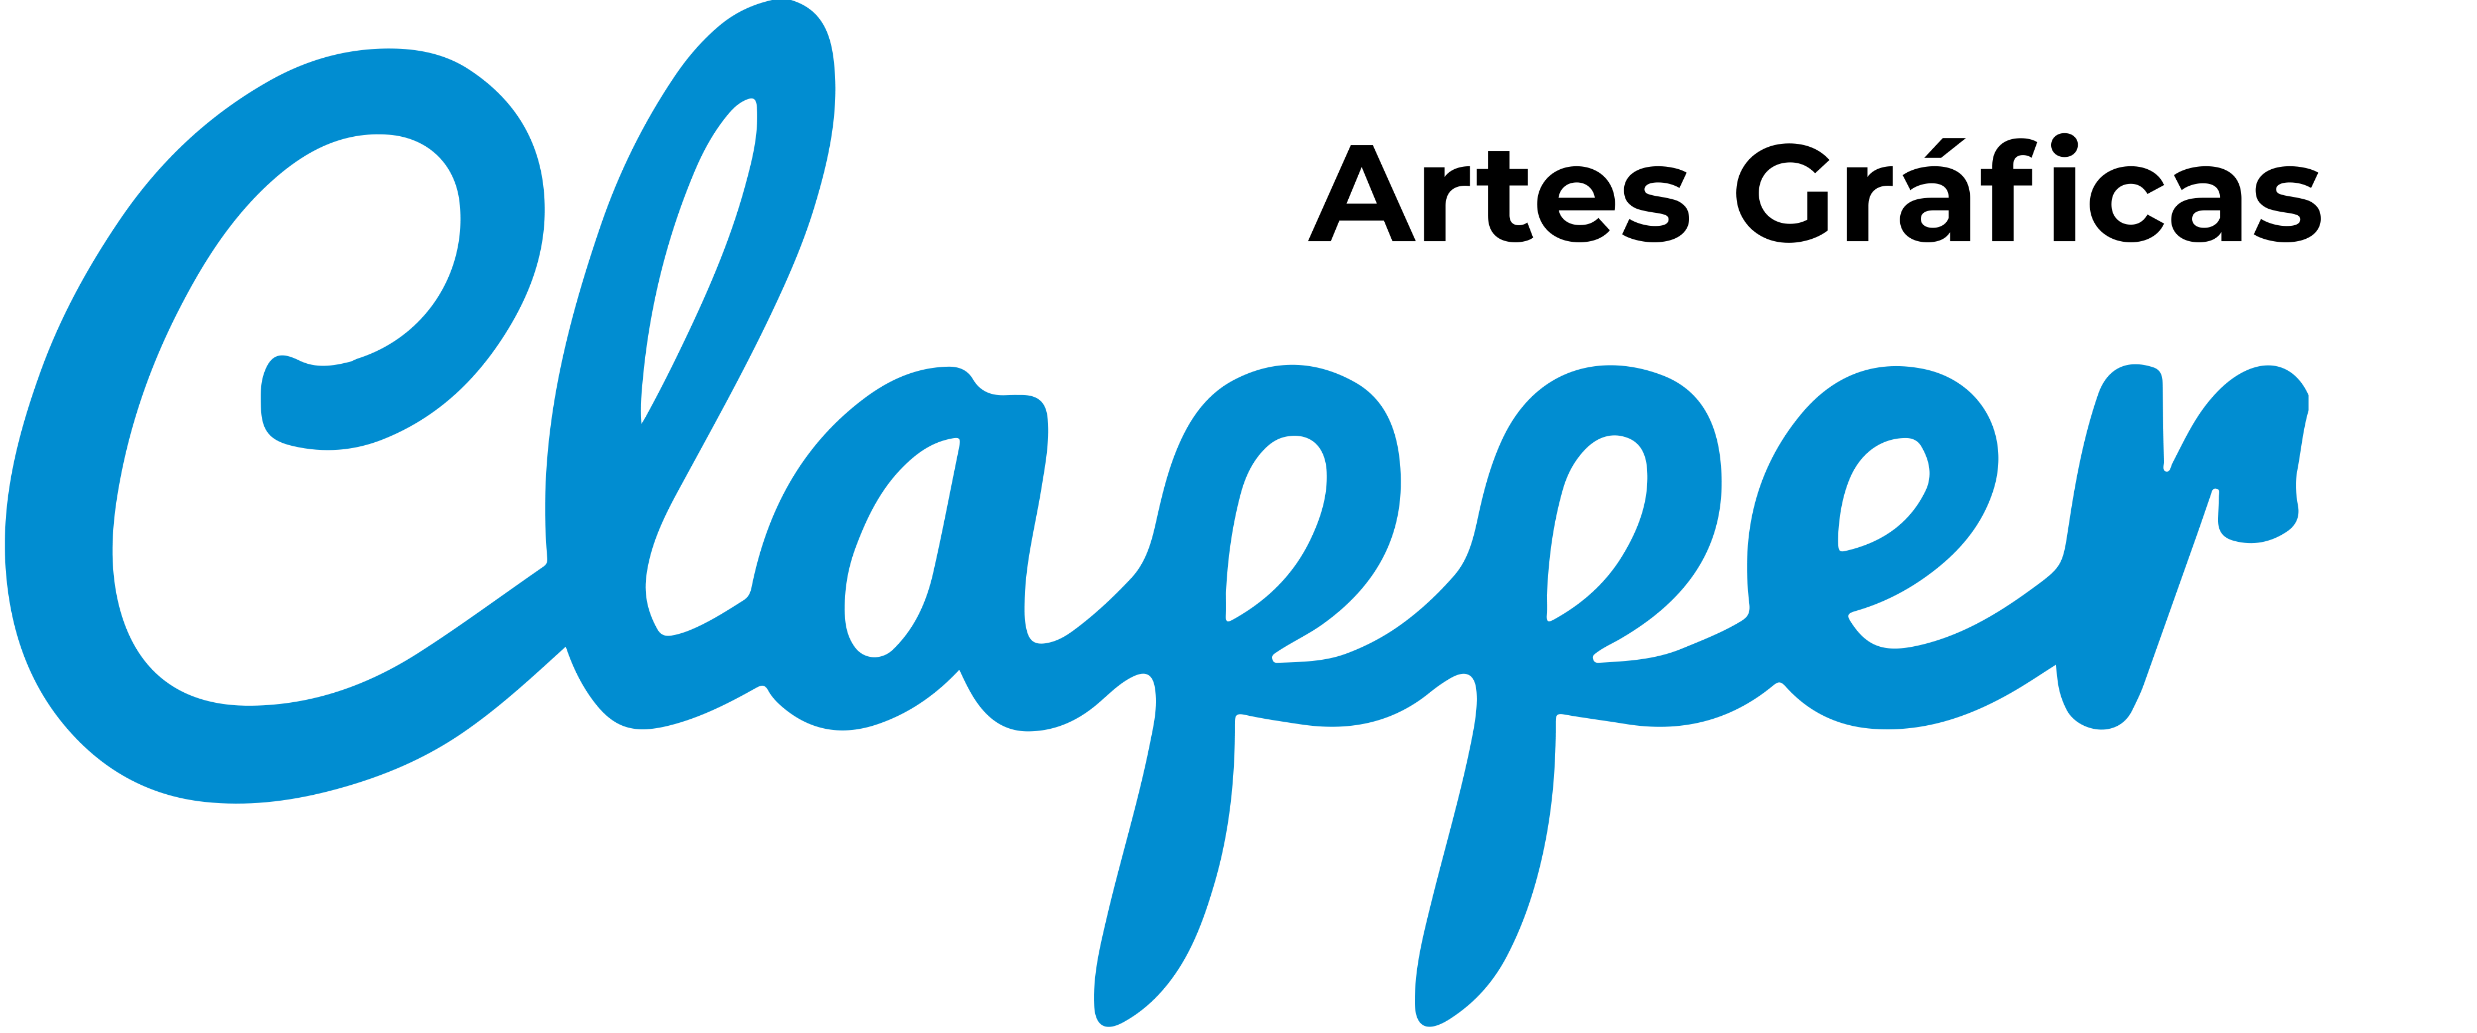 Logo clapper